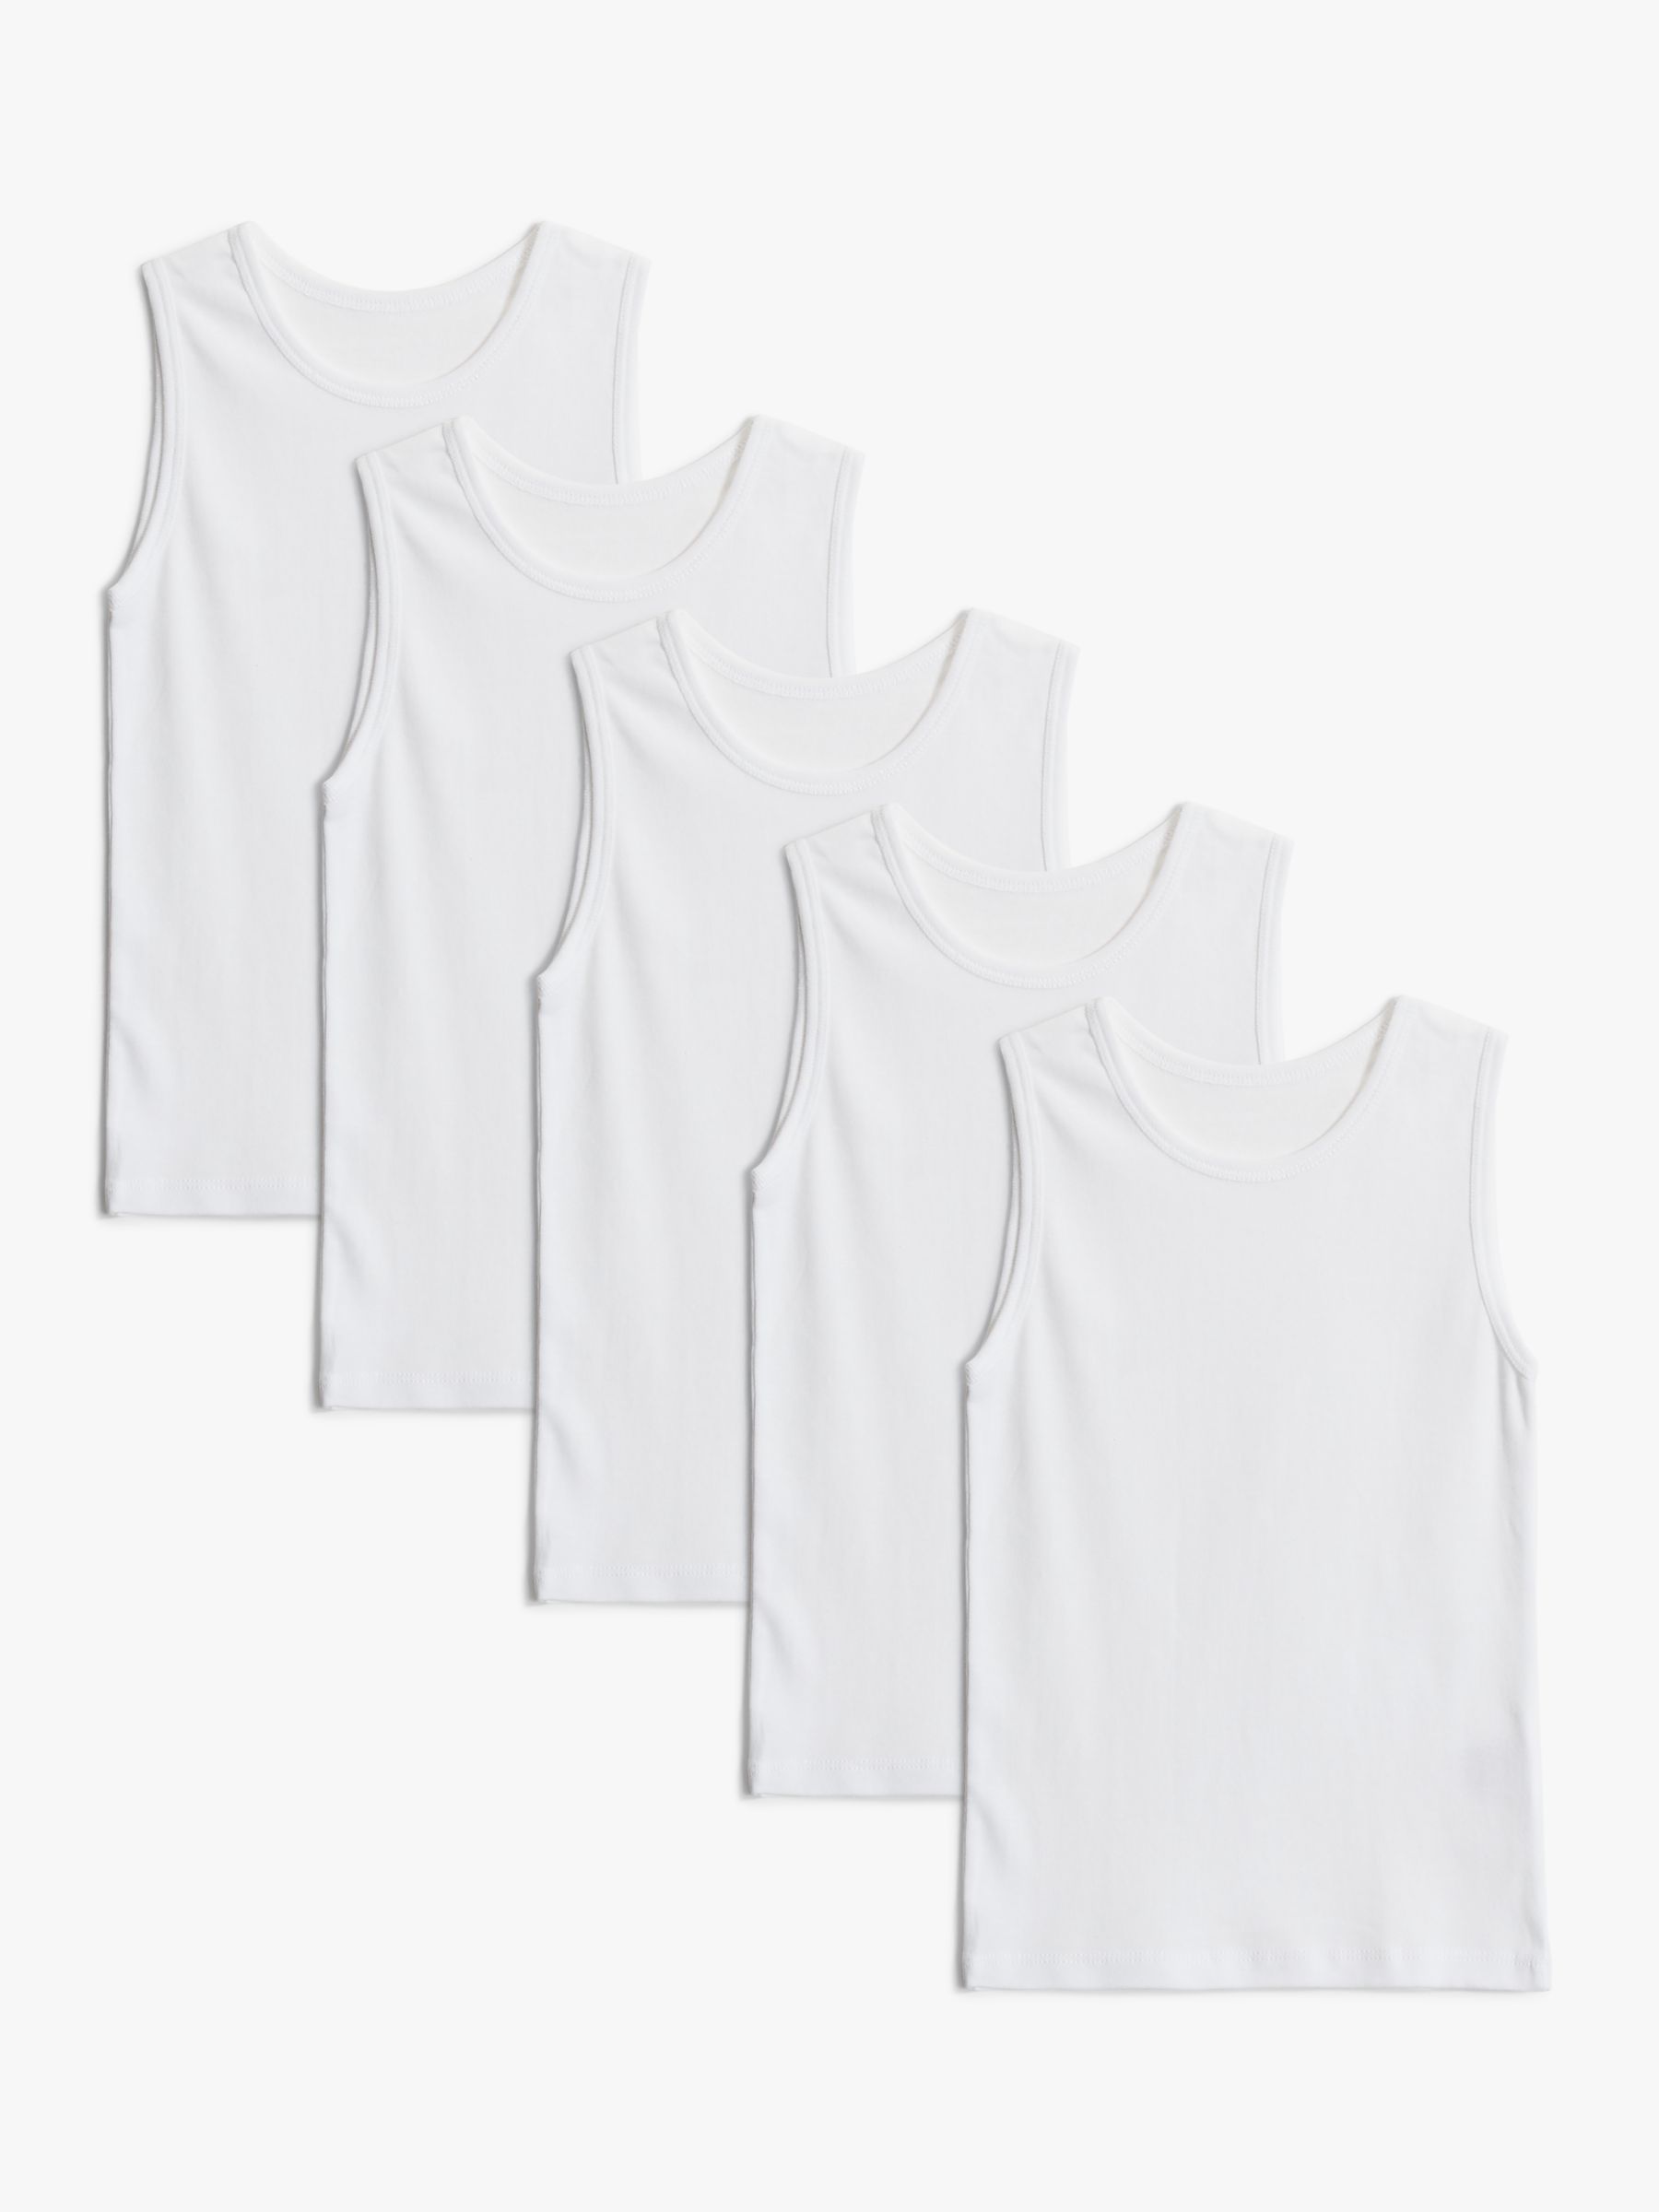 John Lewis Kids' Cotton Singlet Vests, Pack of 5, White, 2 years